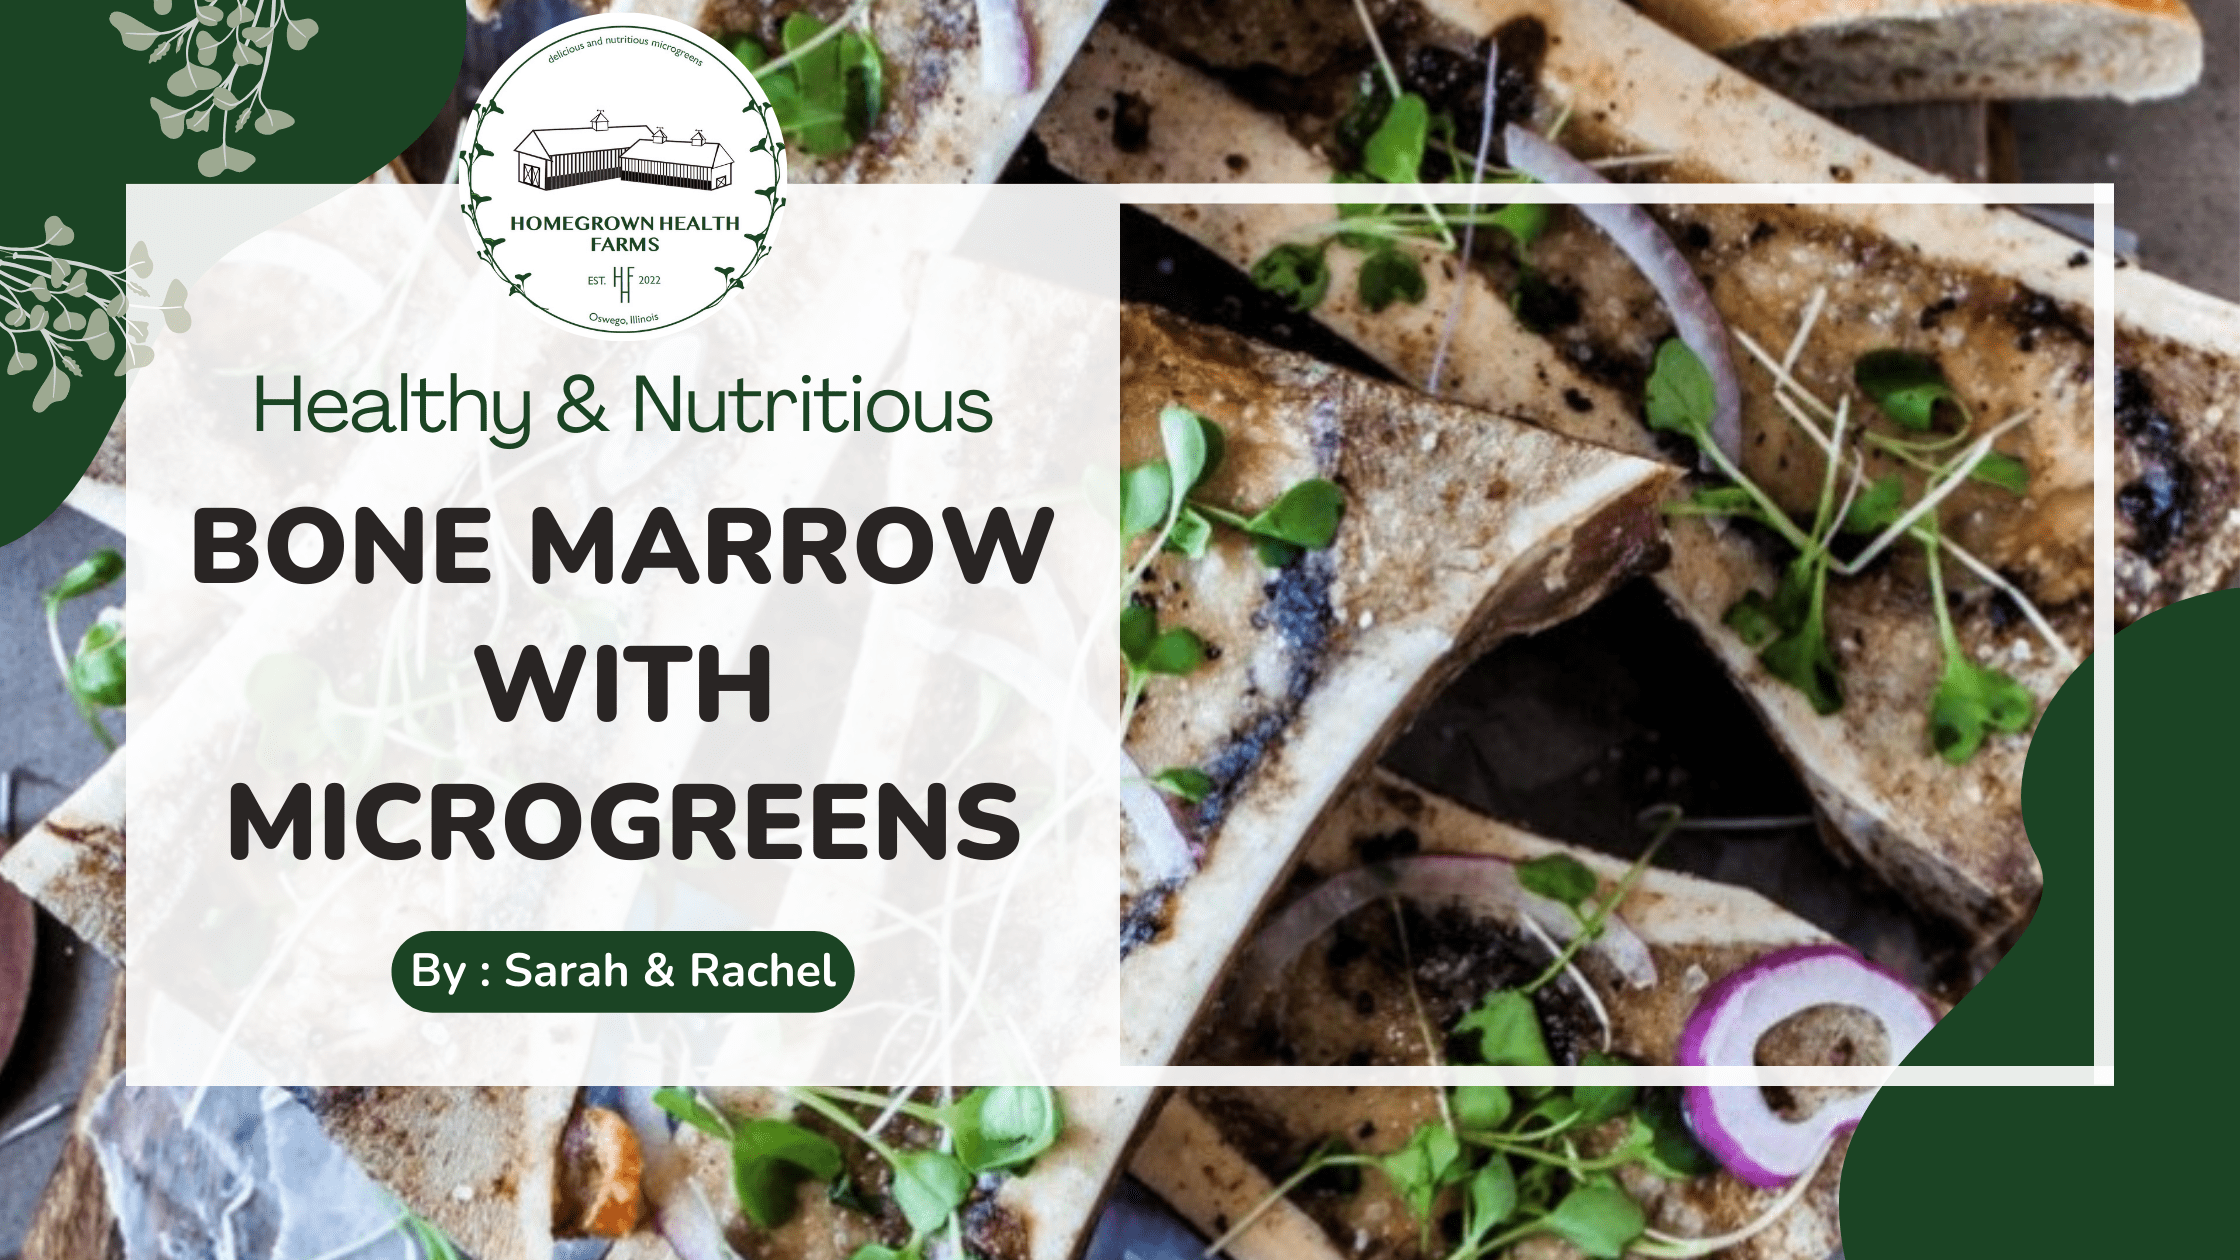 Get the bone marrow with microgreens recipes here